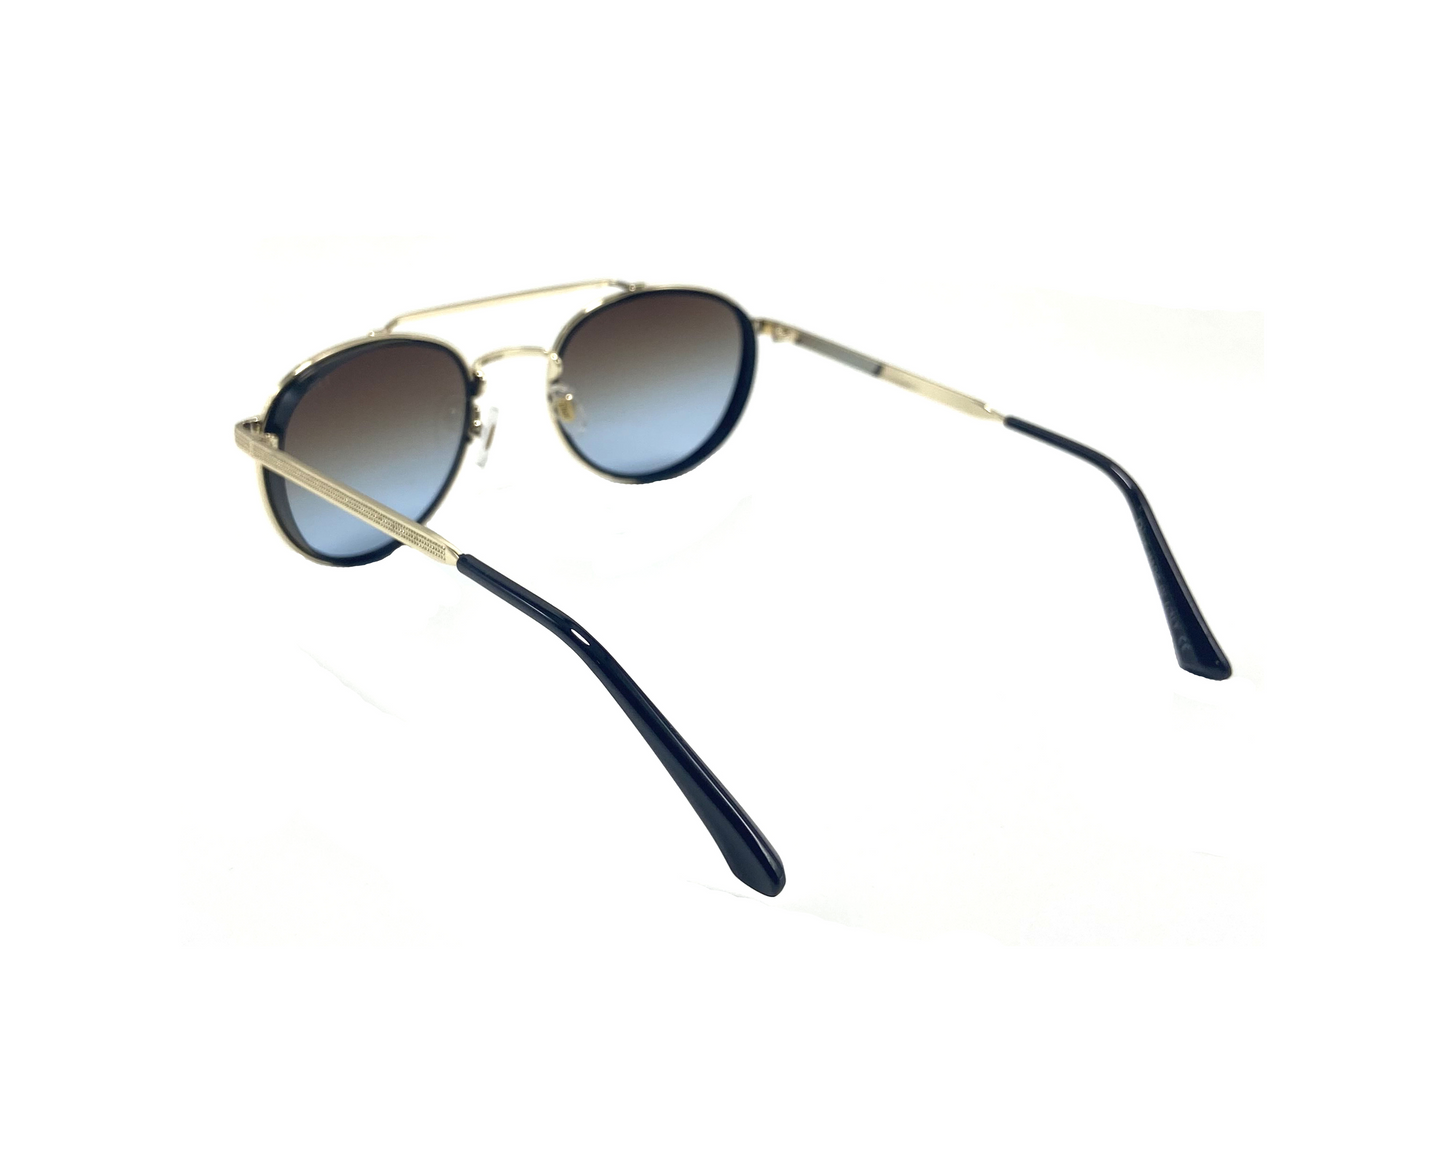 NS Classic - 6872 - Golden - Sunglasses